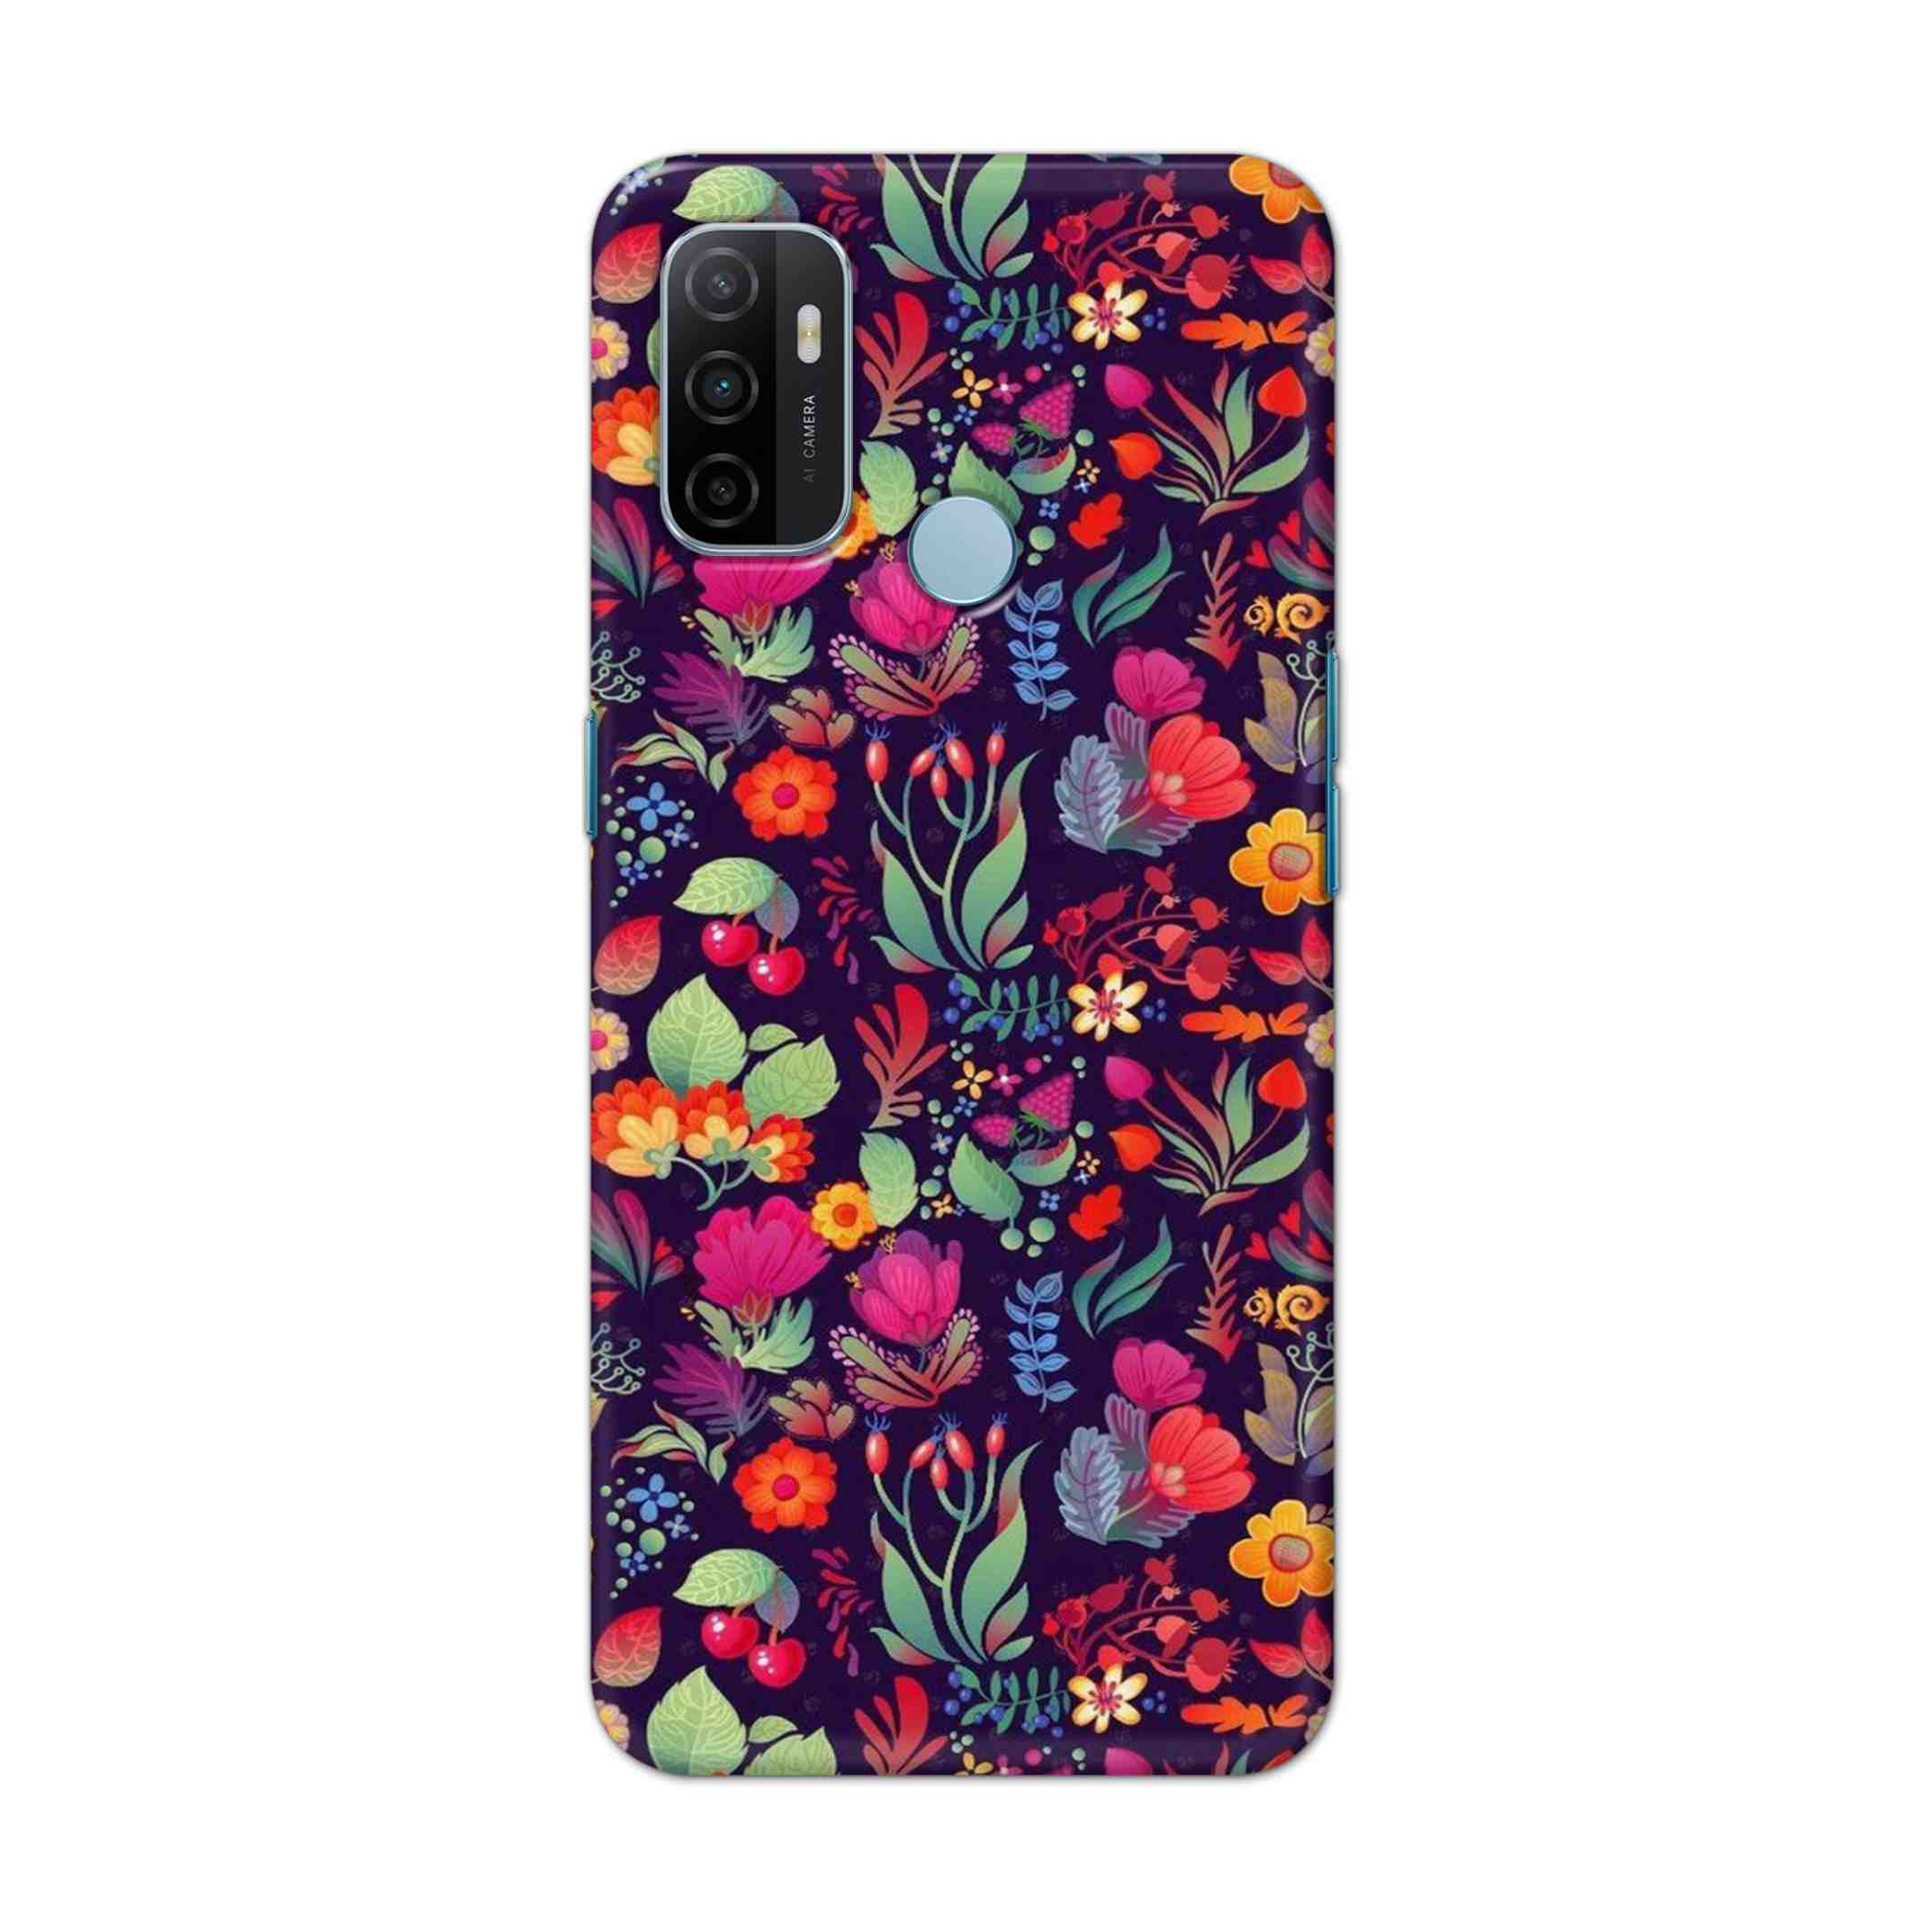 Buy Fruits Flower Hard Back Mobile Phone Case Cover For OPPO A53 (2020) Online